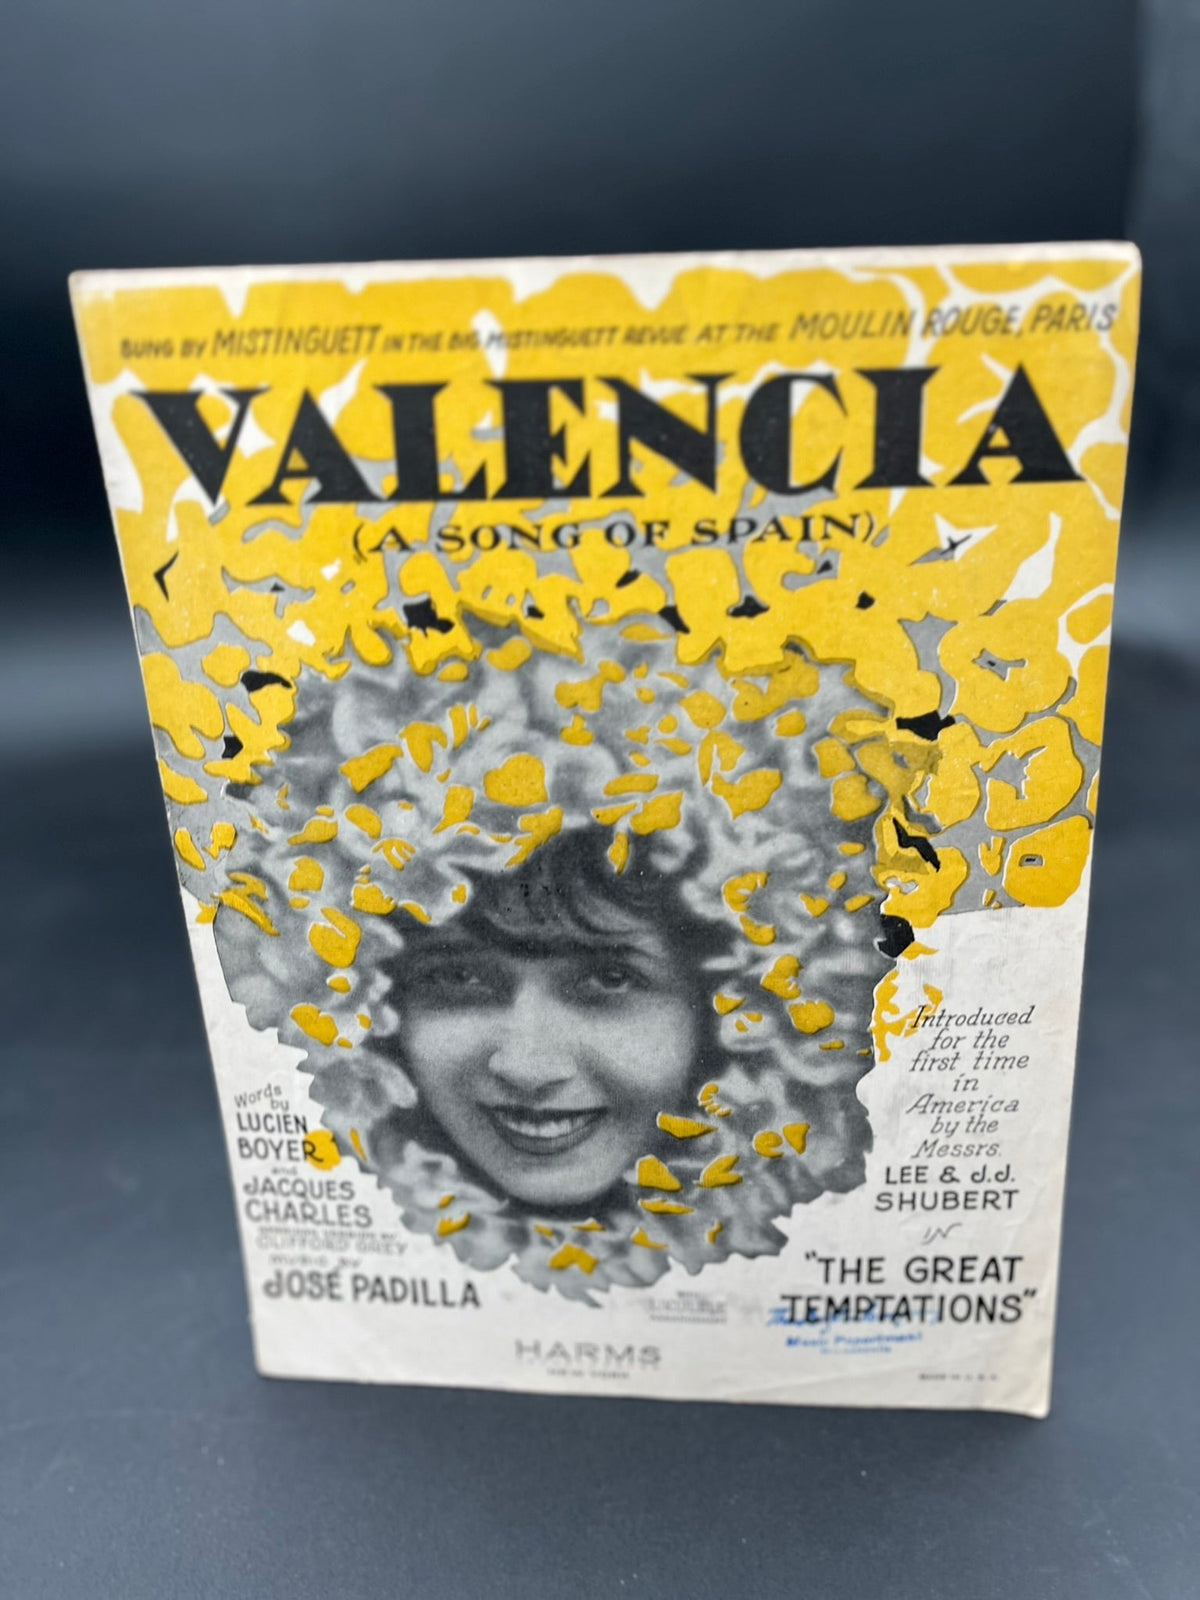 Valencia ( A Song of Spain)